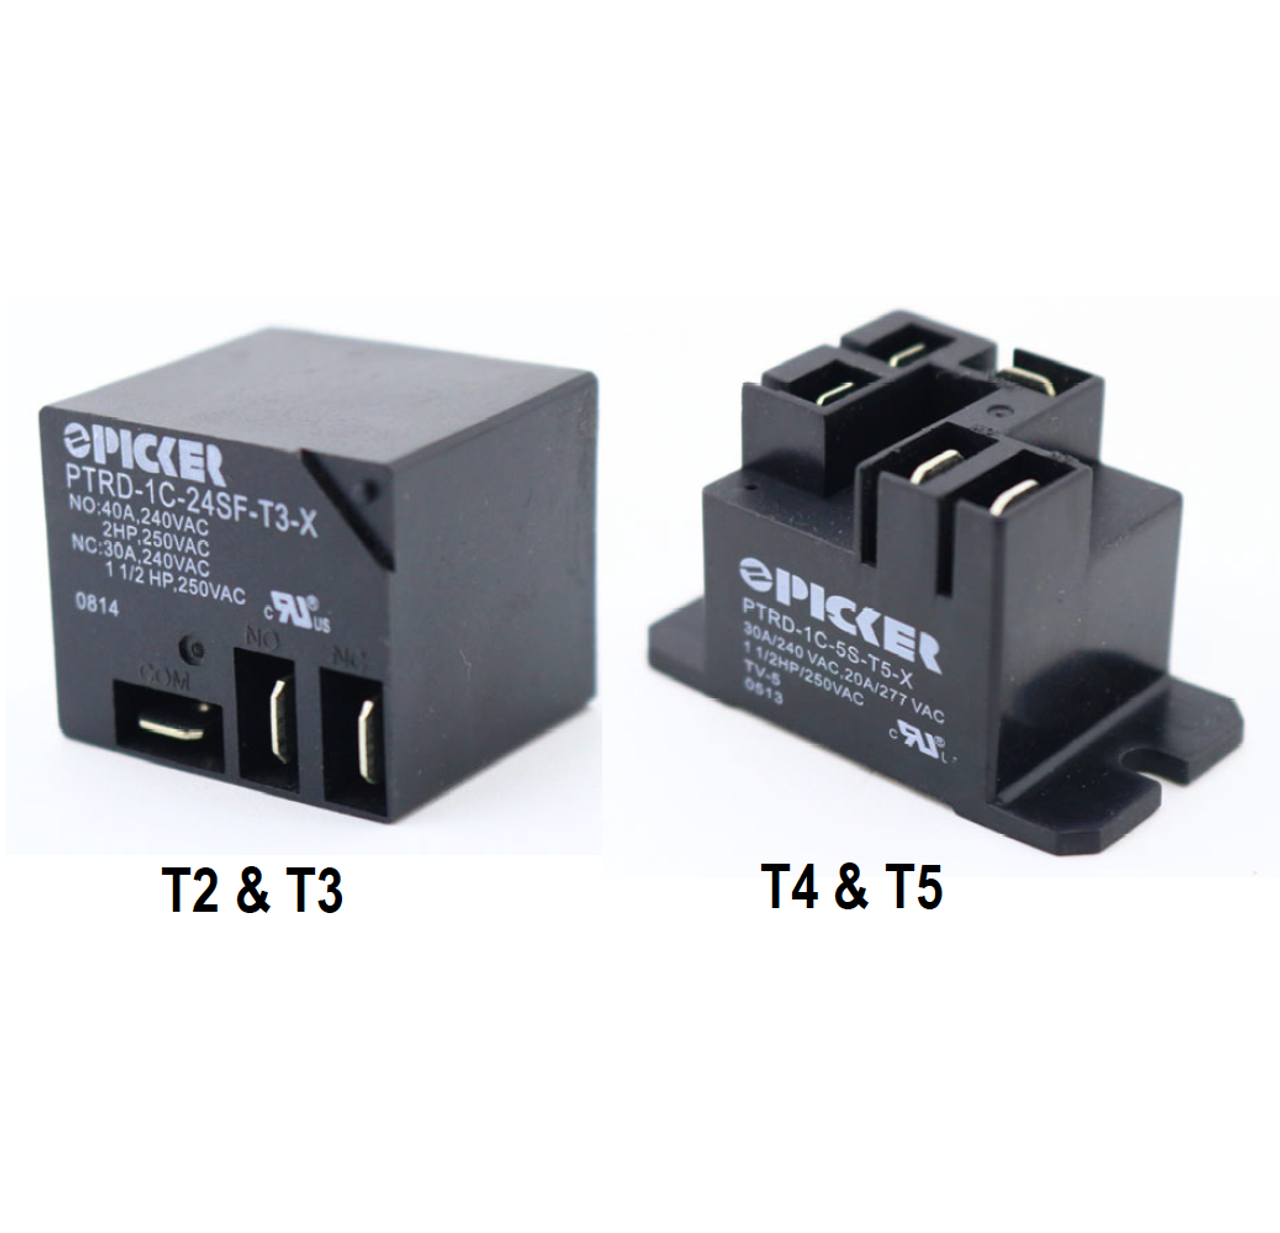 Picker PTRD-1A-24C-T3-X Power Relays